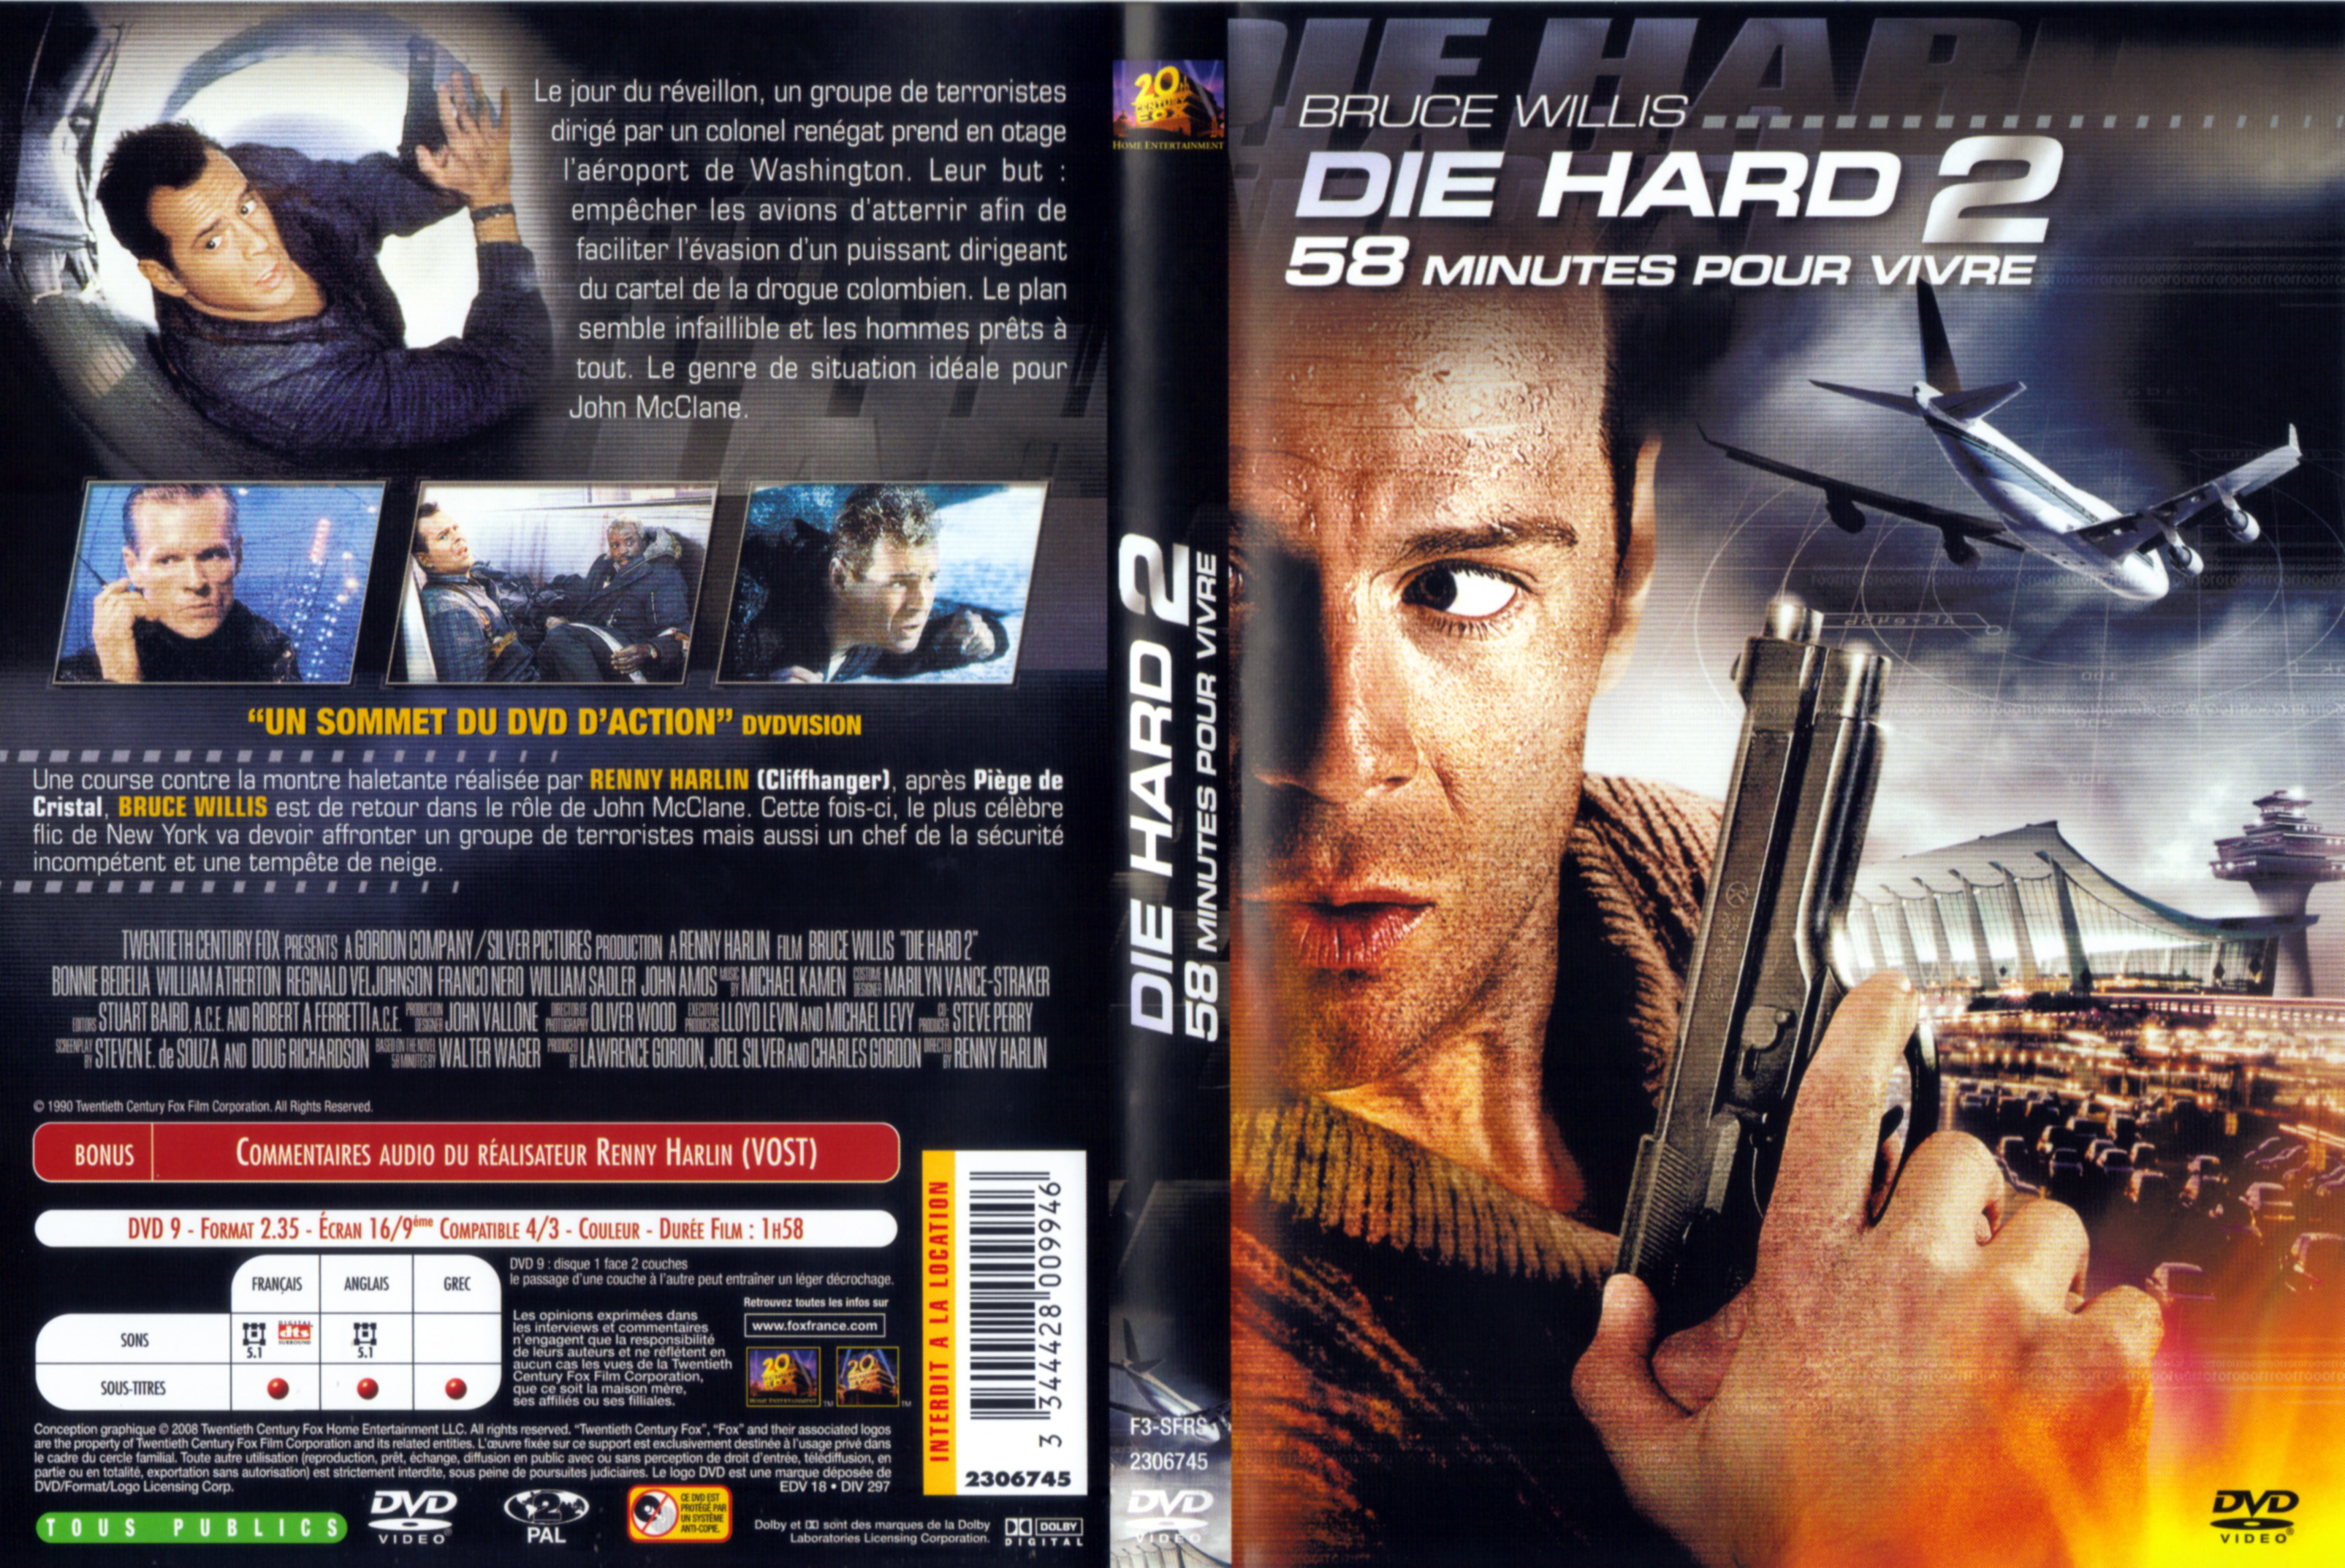 Jaquette DVD Die hard 2 - 58 minutes pour vivre v3